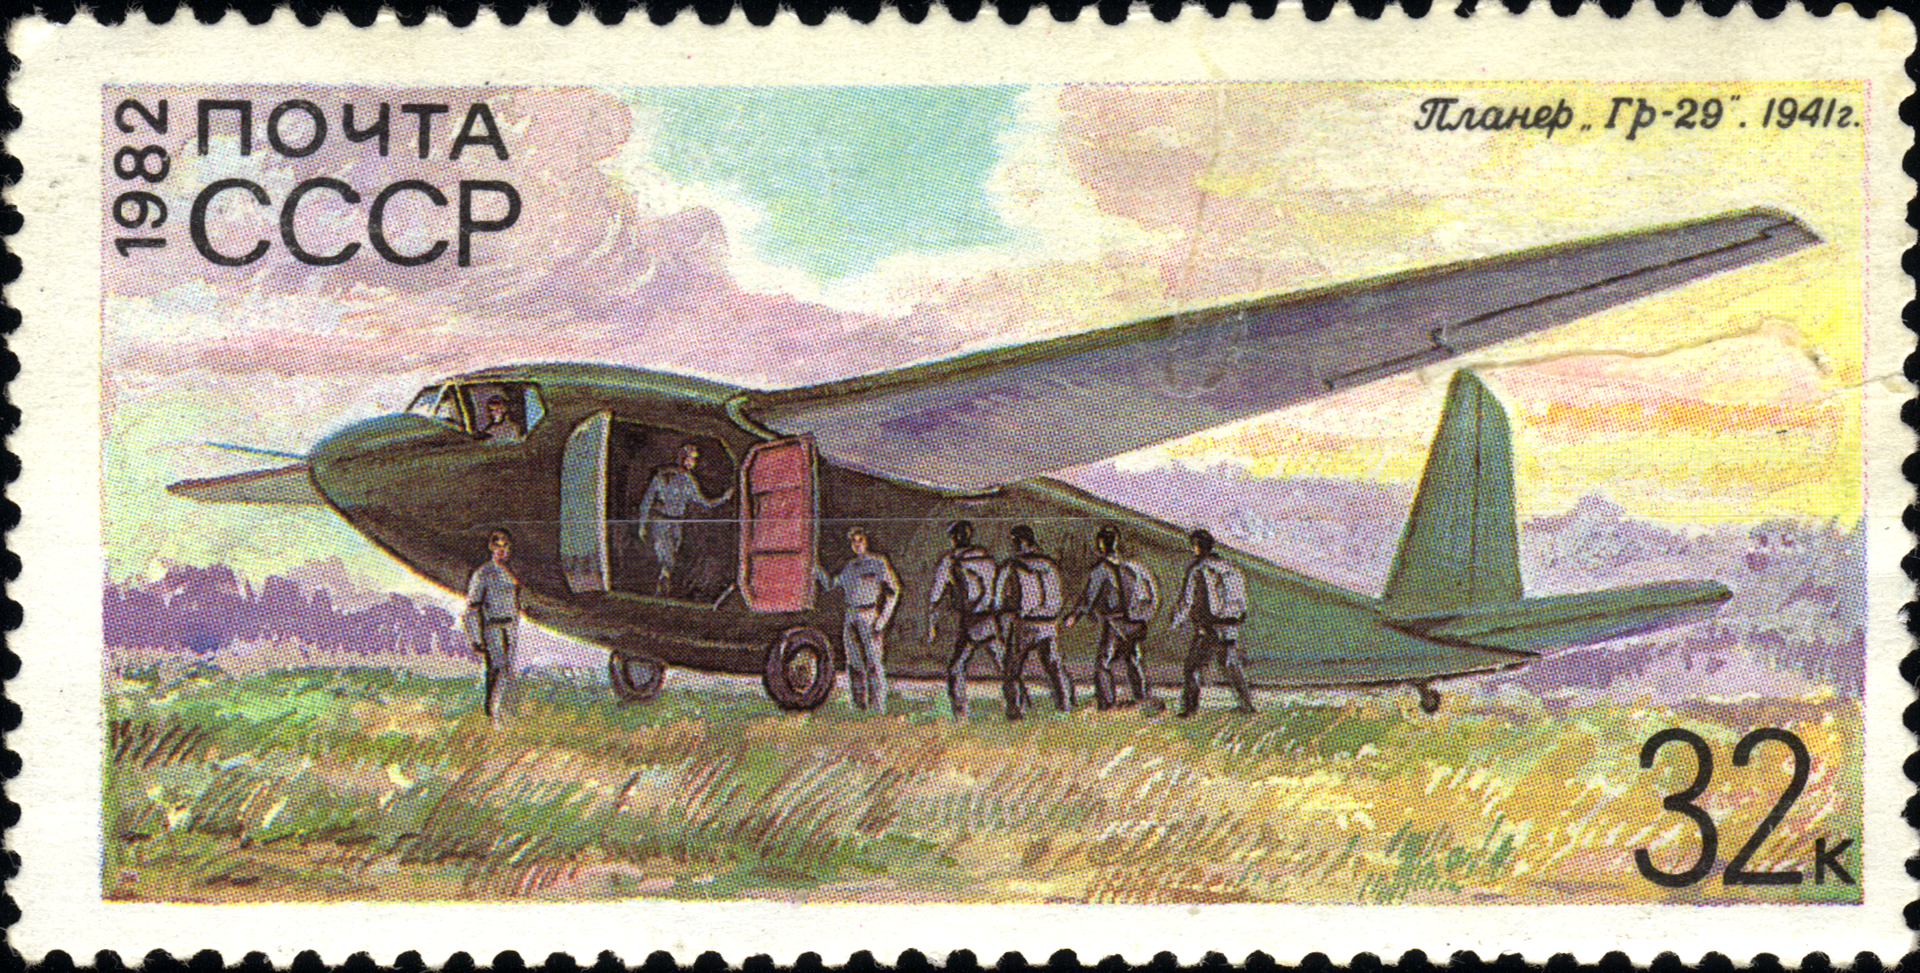 Jedrilica G-11 (Gr-29) na poštanskoj marki
